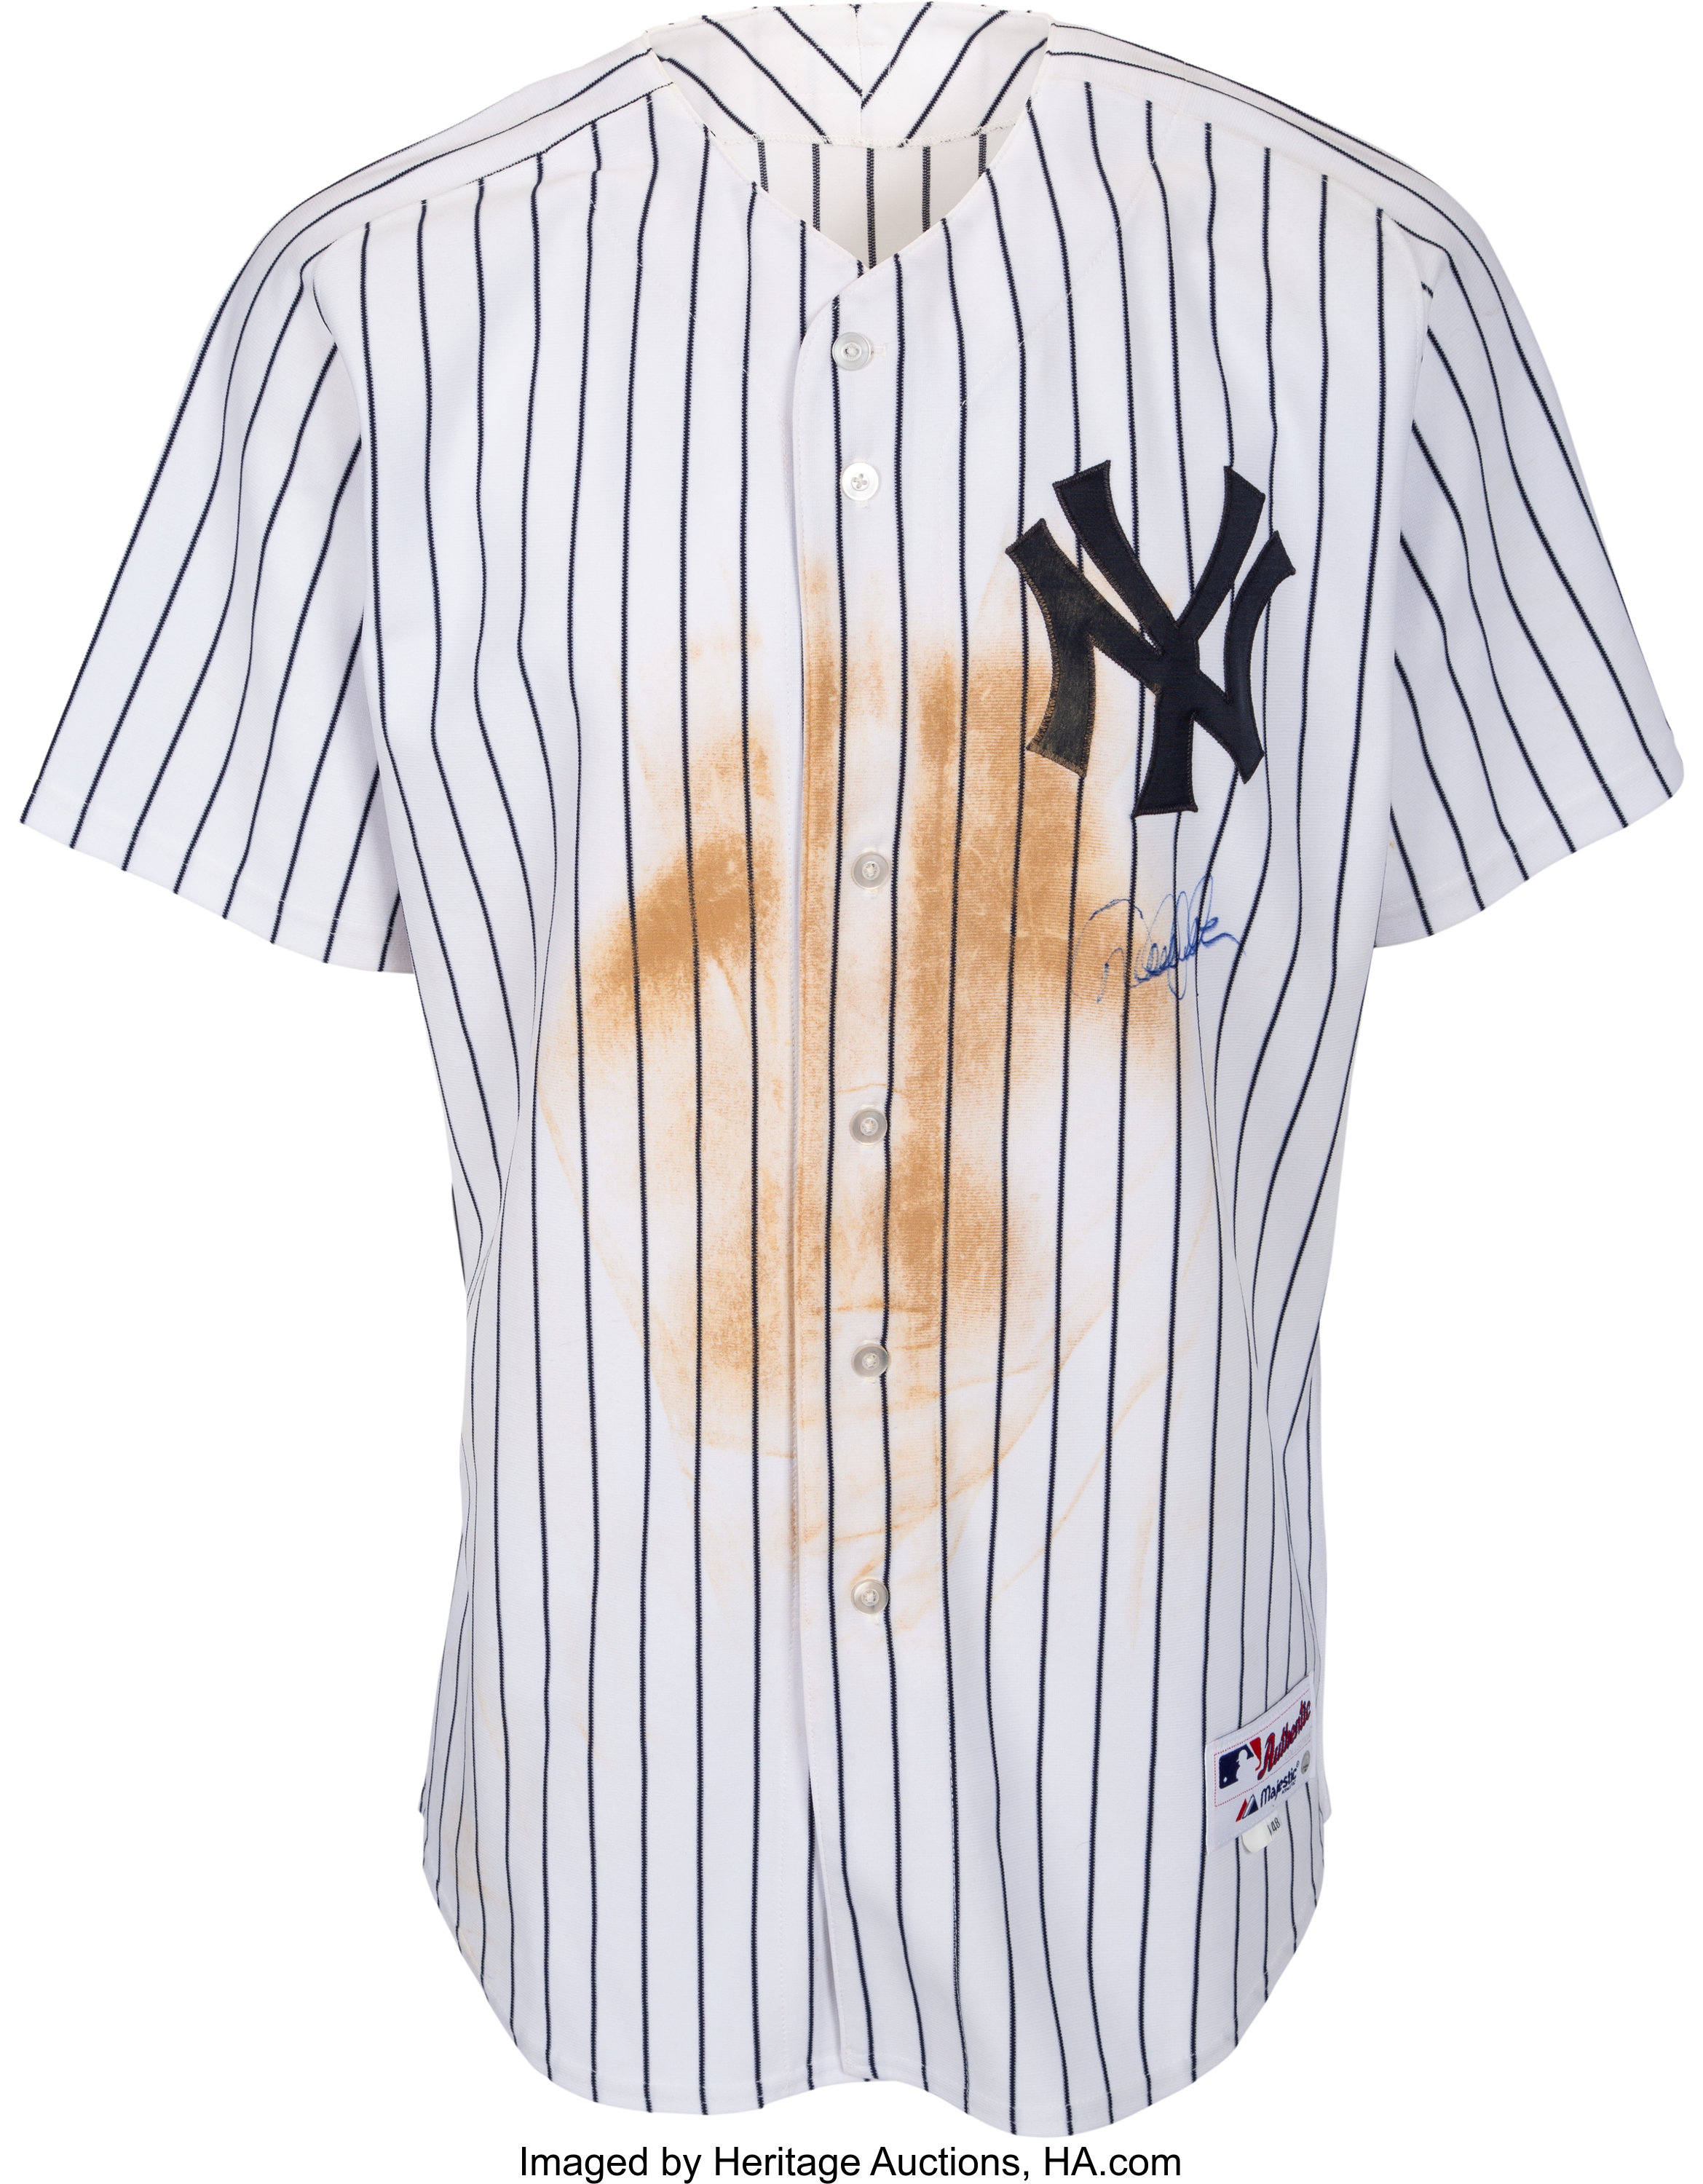 New York Yankees Team Issued #50 White Pinstripe Jersey vs